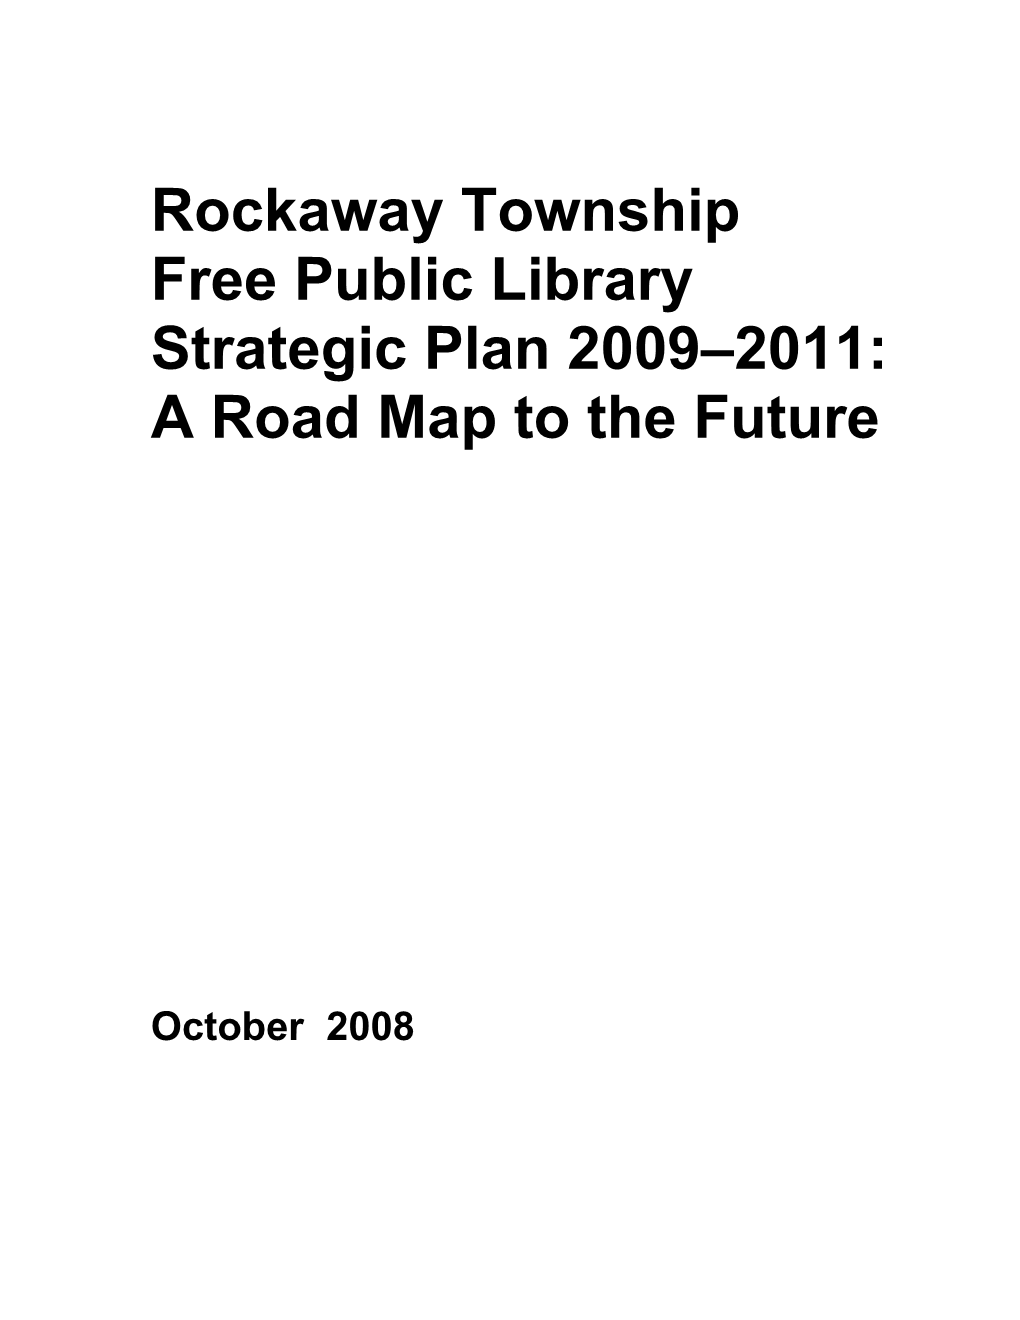 Rockaway Township Free Public Library